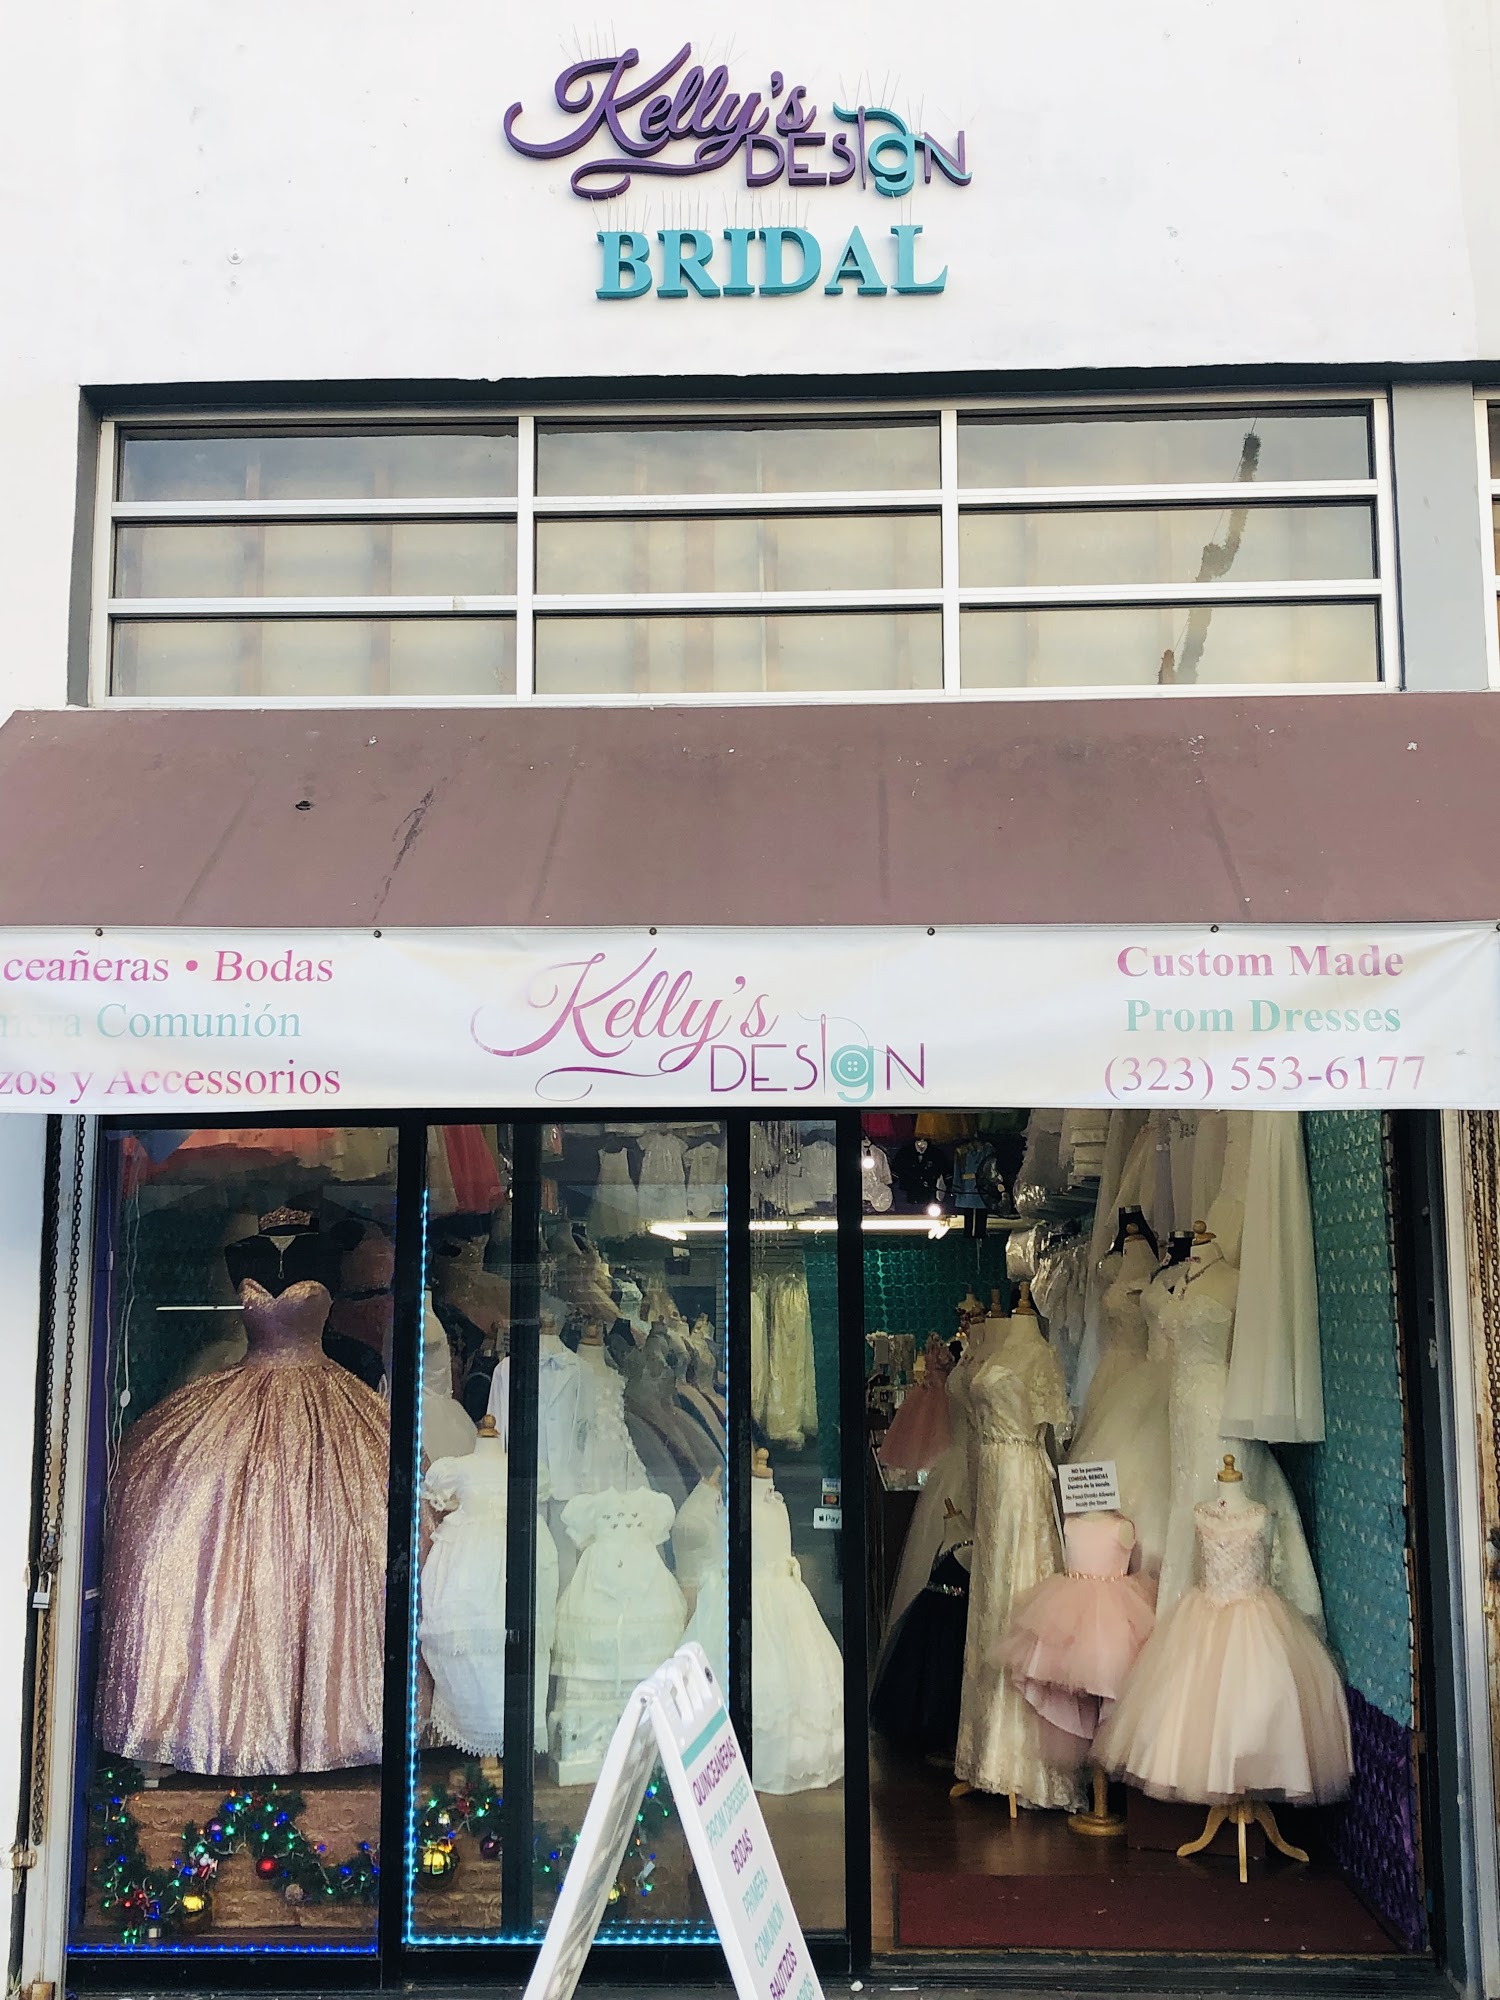 Kelly's Design Bridal